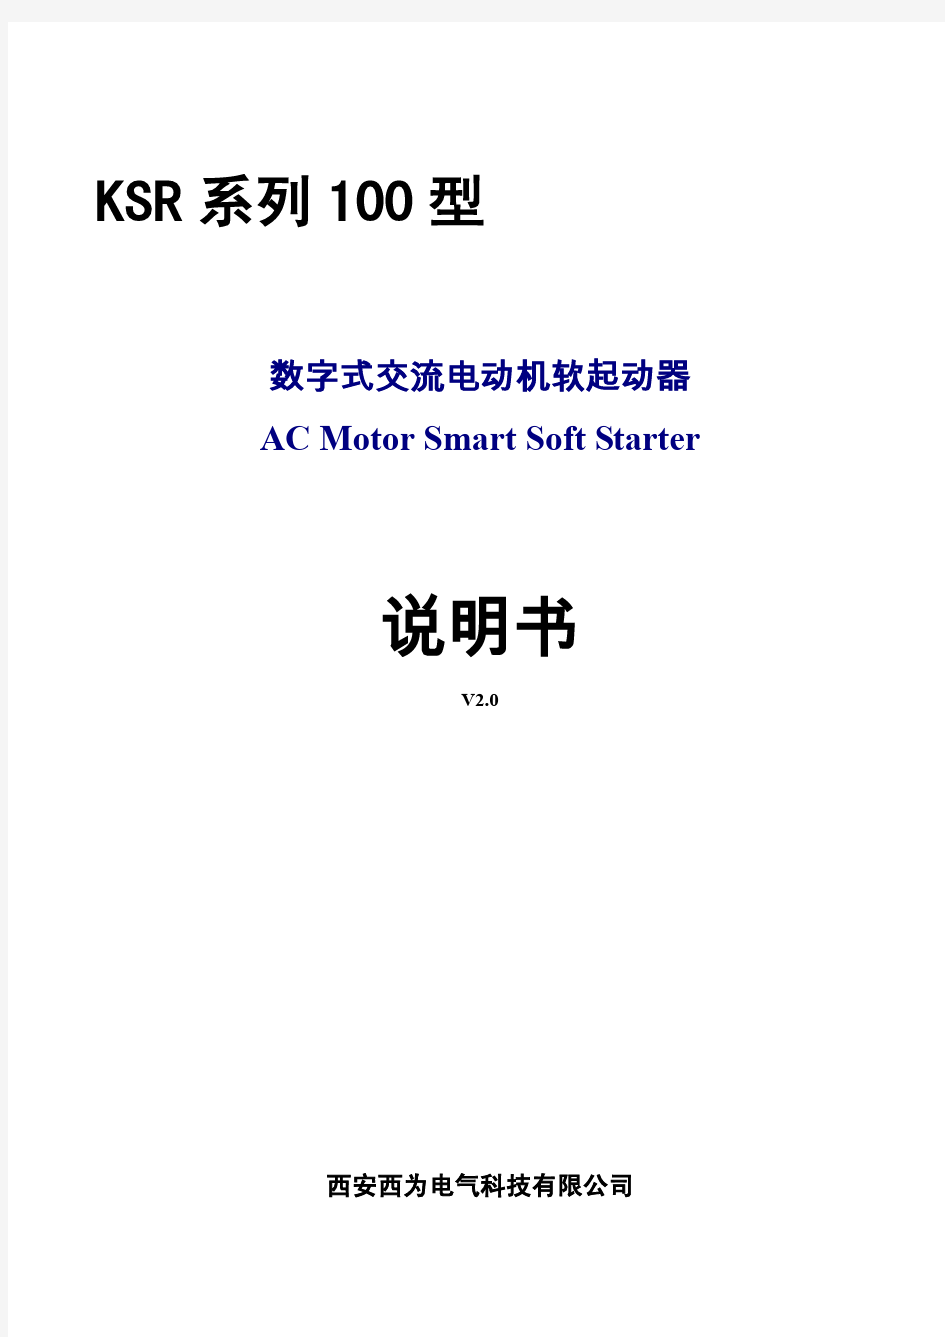 KSR系列100型软起动器说明书